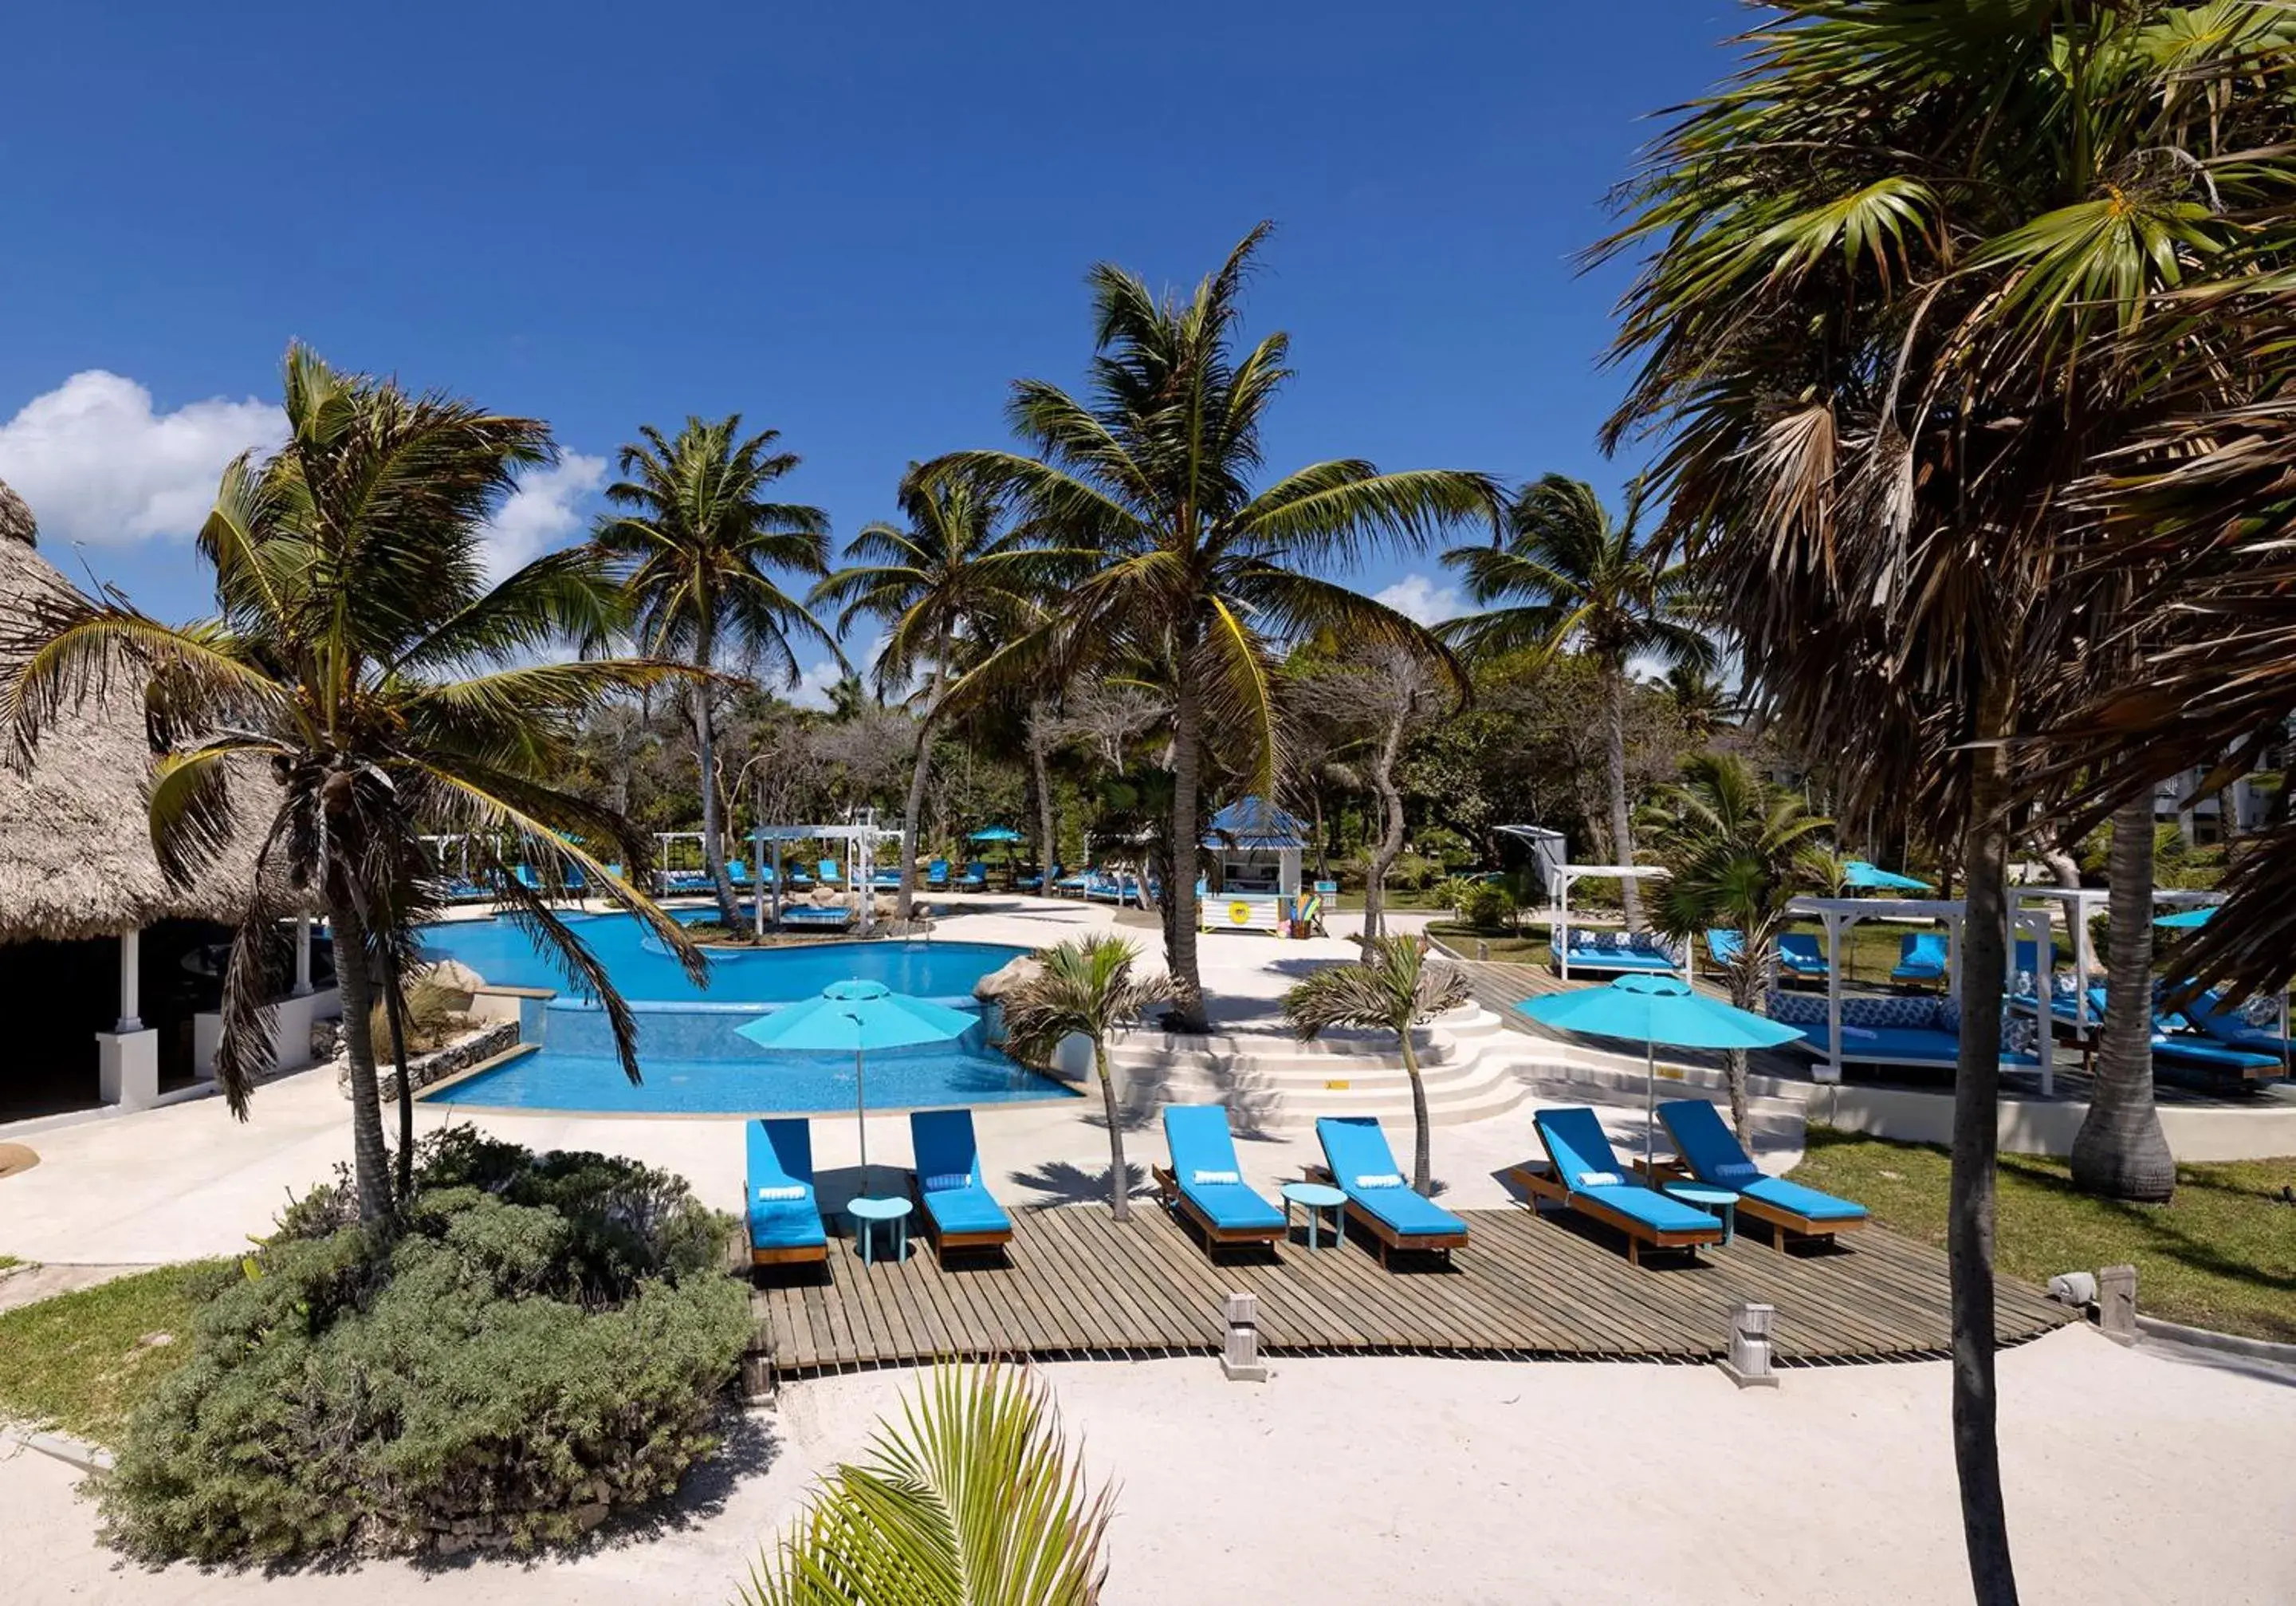 Swimming Pool in Margaritaville Beach Resort Ambergris Caye - Belize